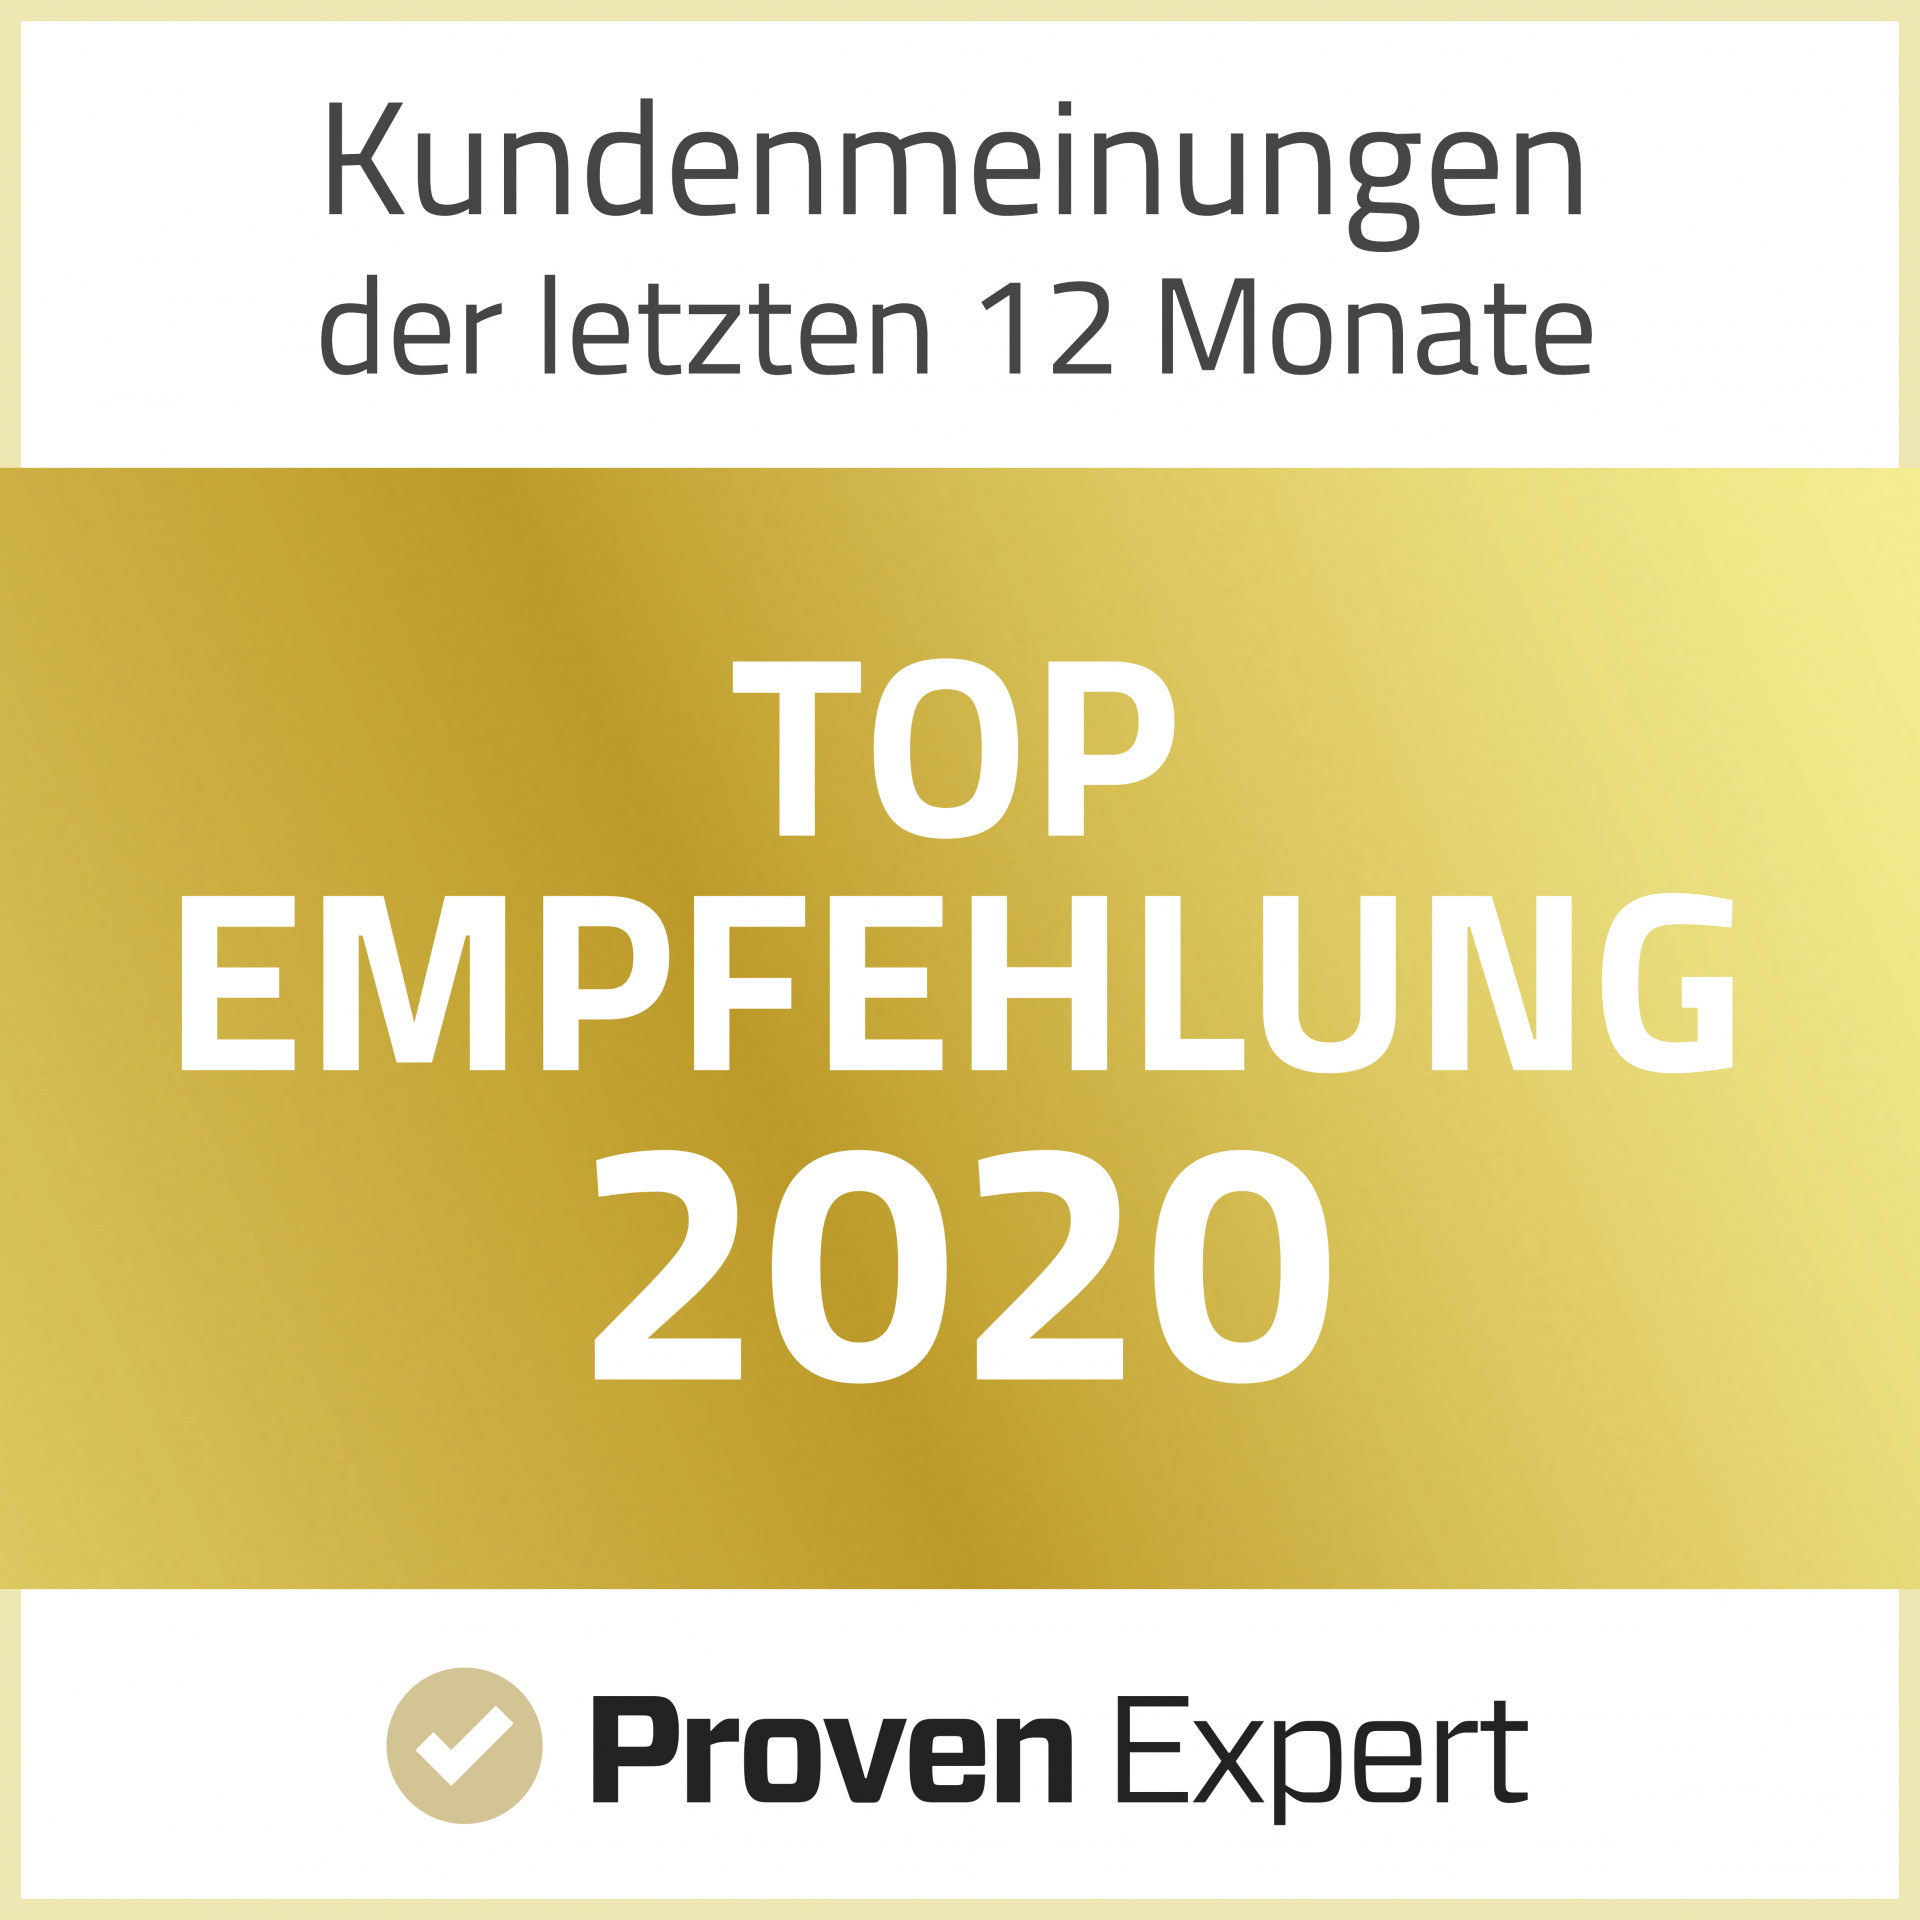 Top Empfehlung 2020 Frankfurt